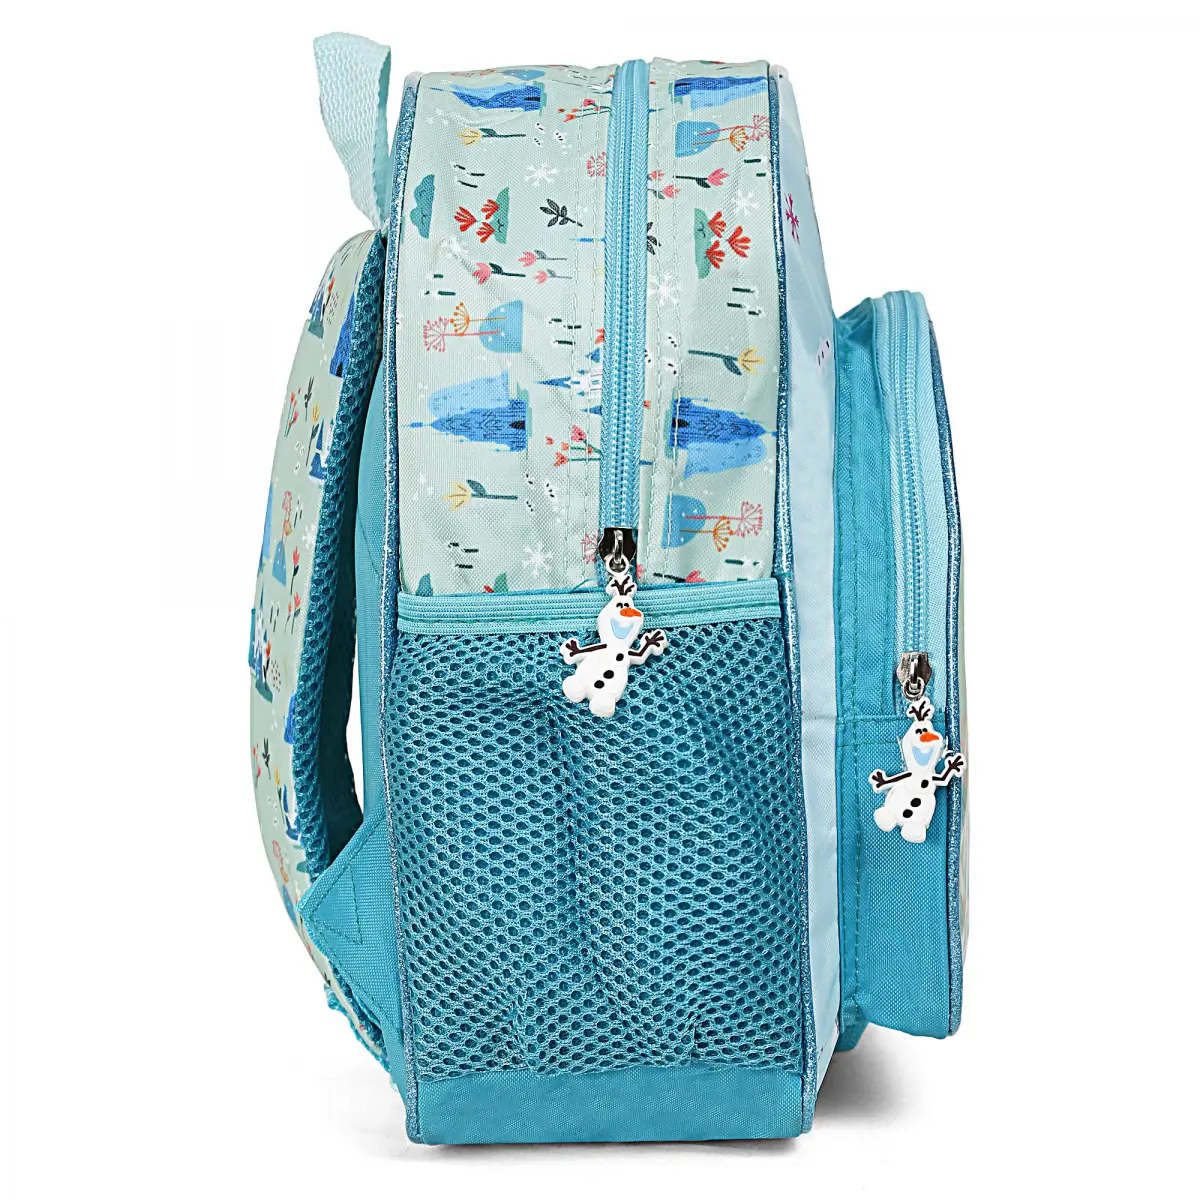 Disney Frozen Heart Bag Pack, 12 inch, Blue